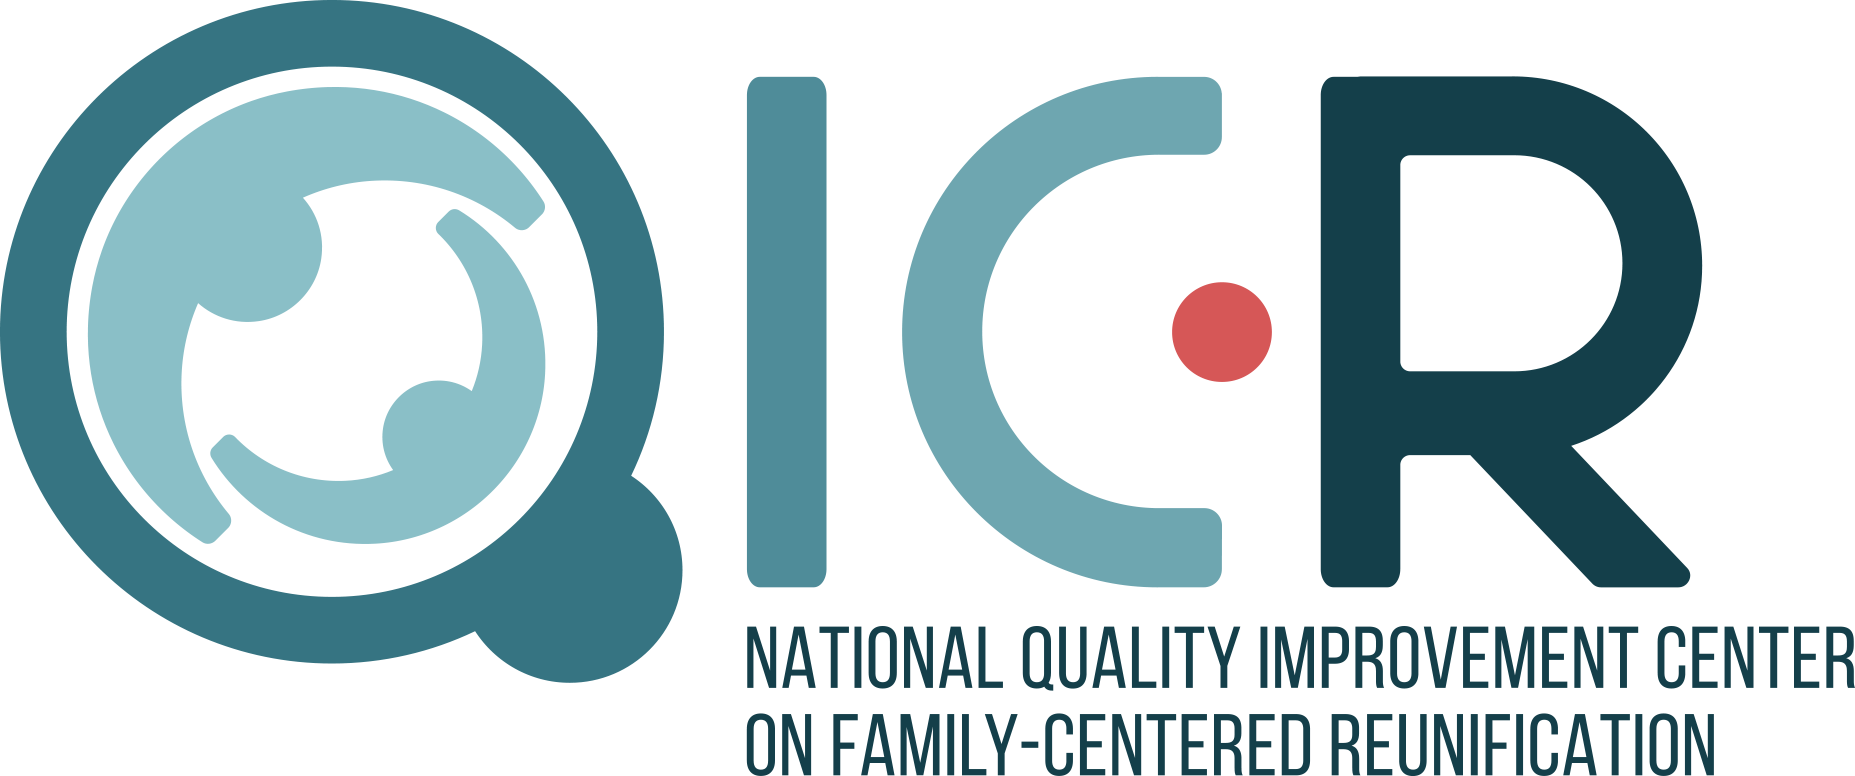 QICR1 logo